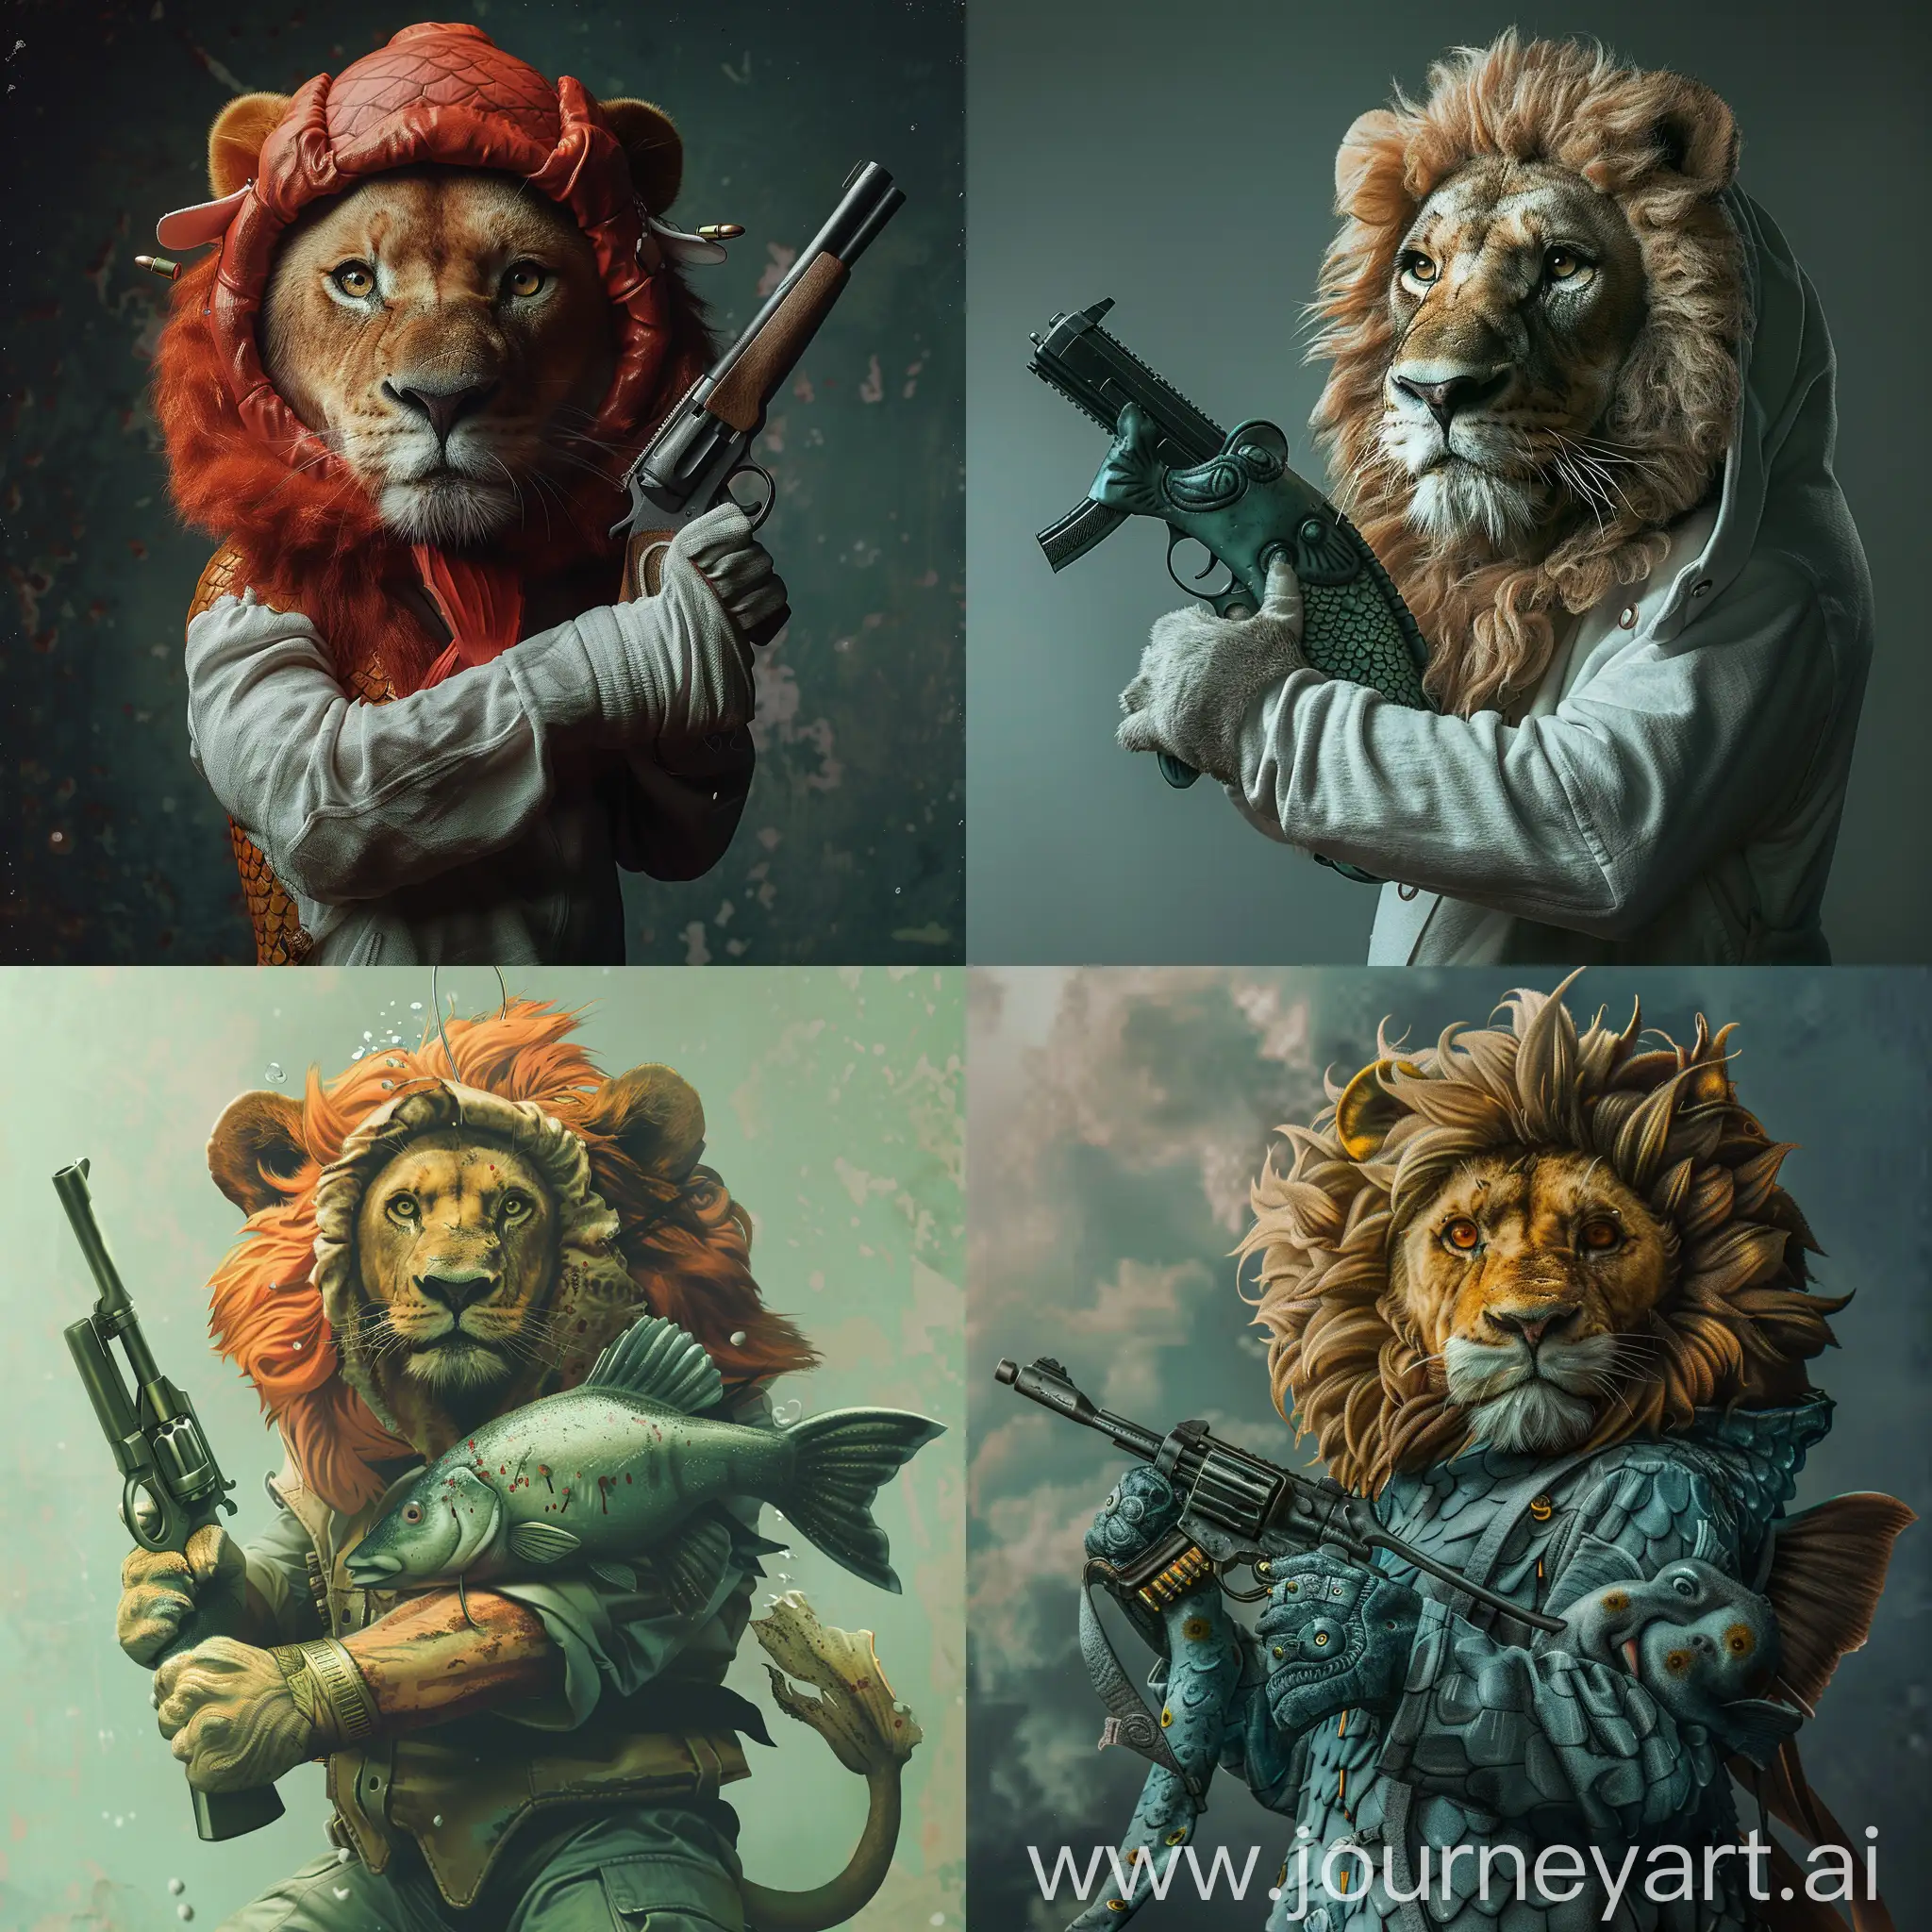 Realistic-Lion-in-Fish-Costume-Holding-Gun